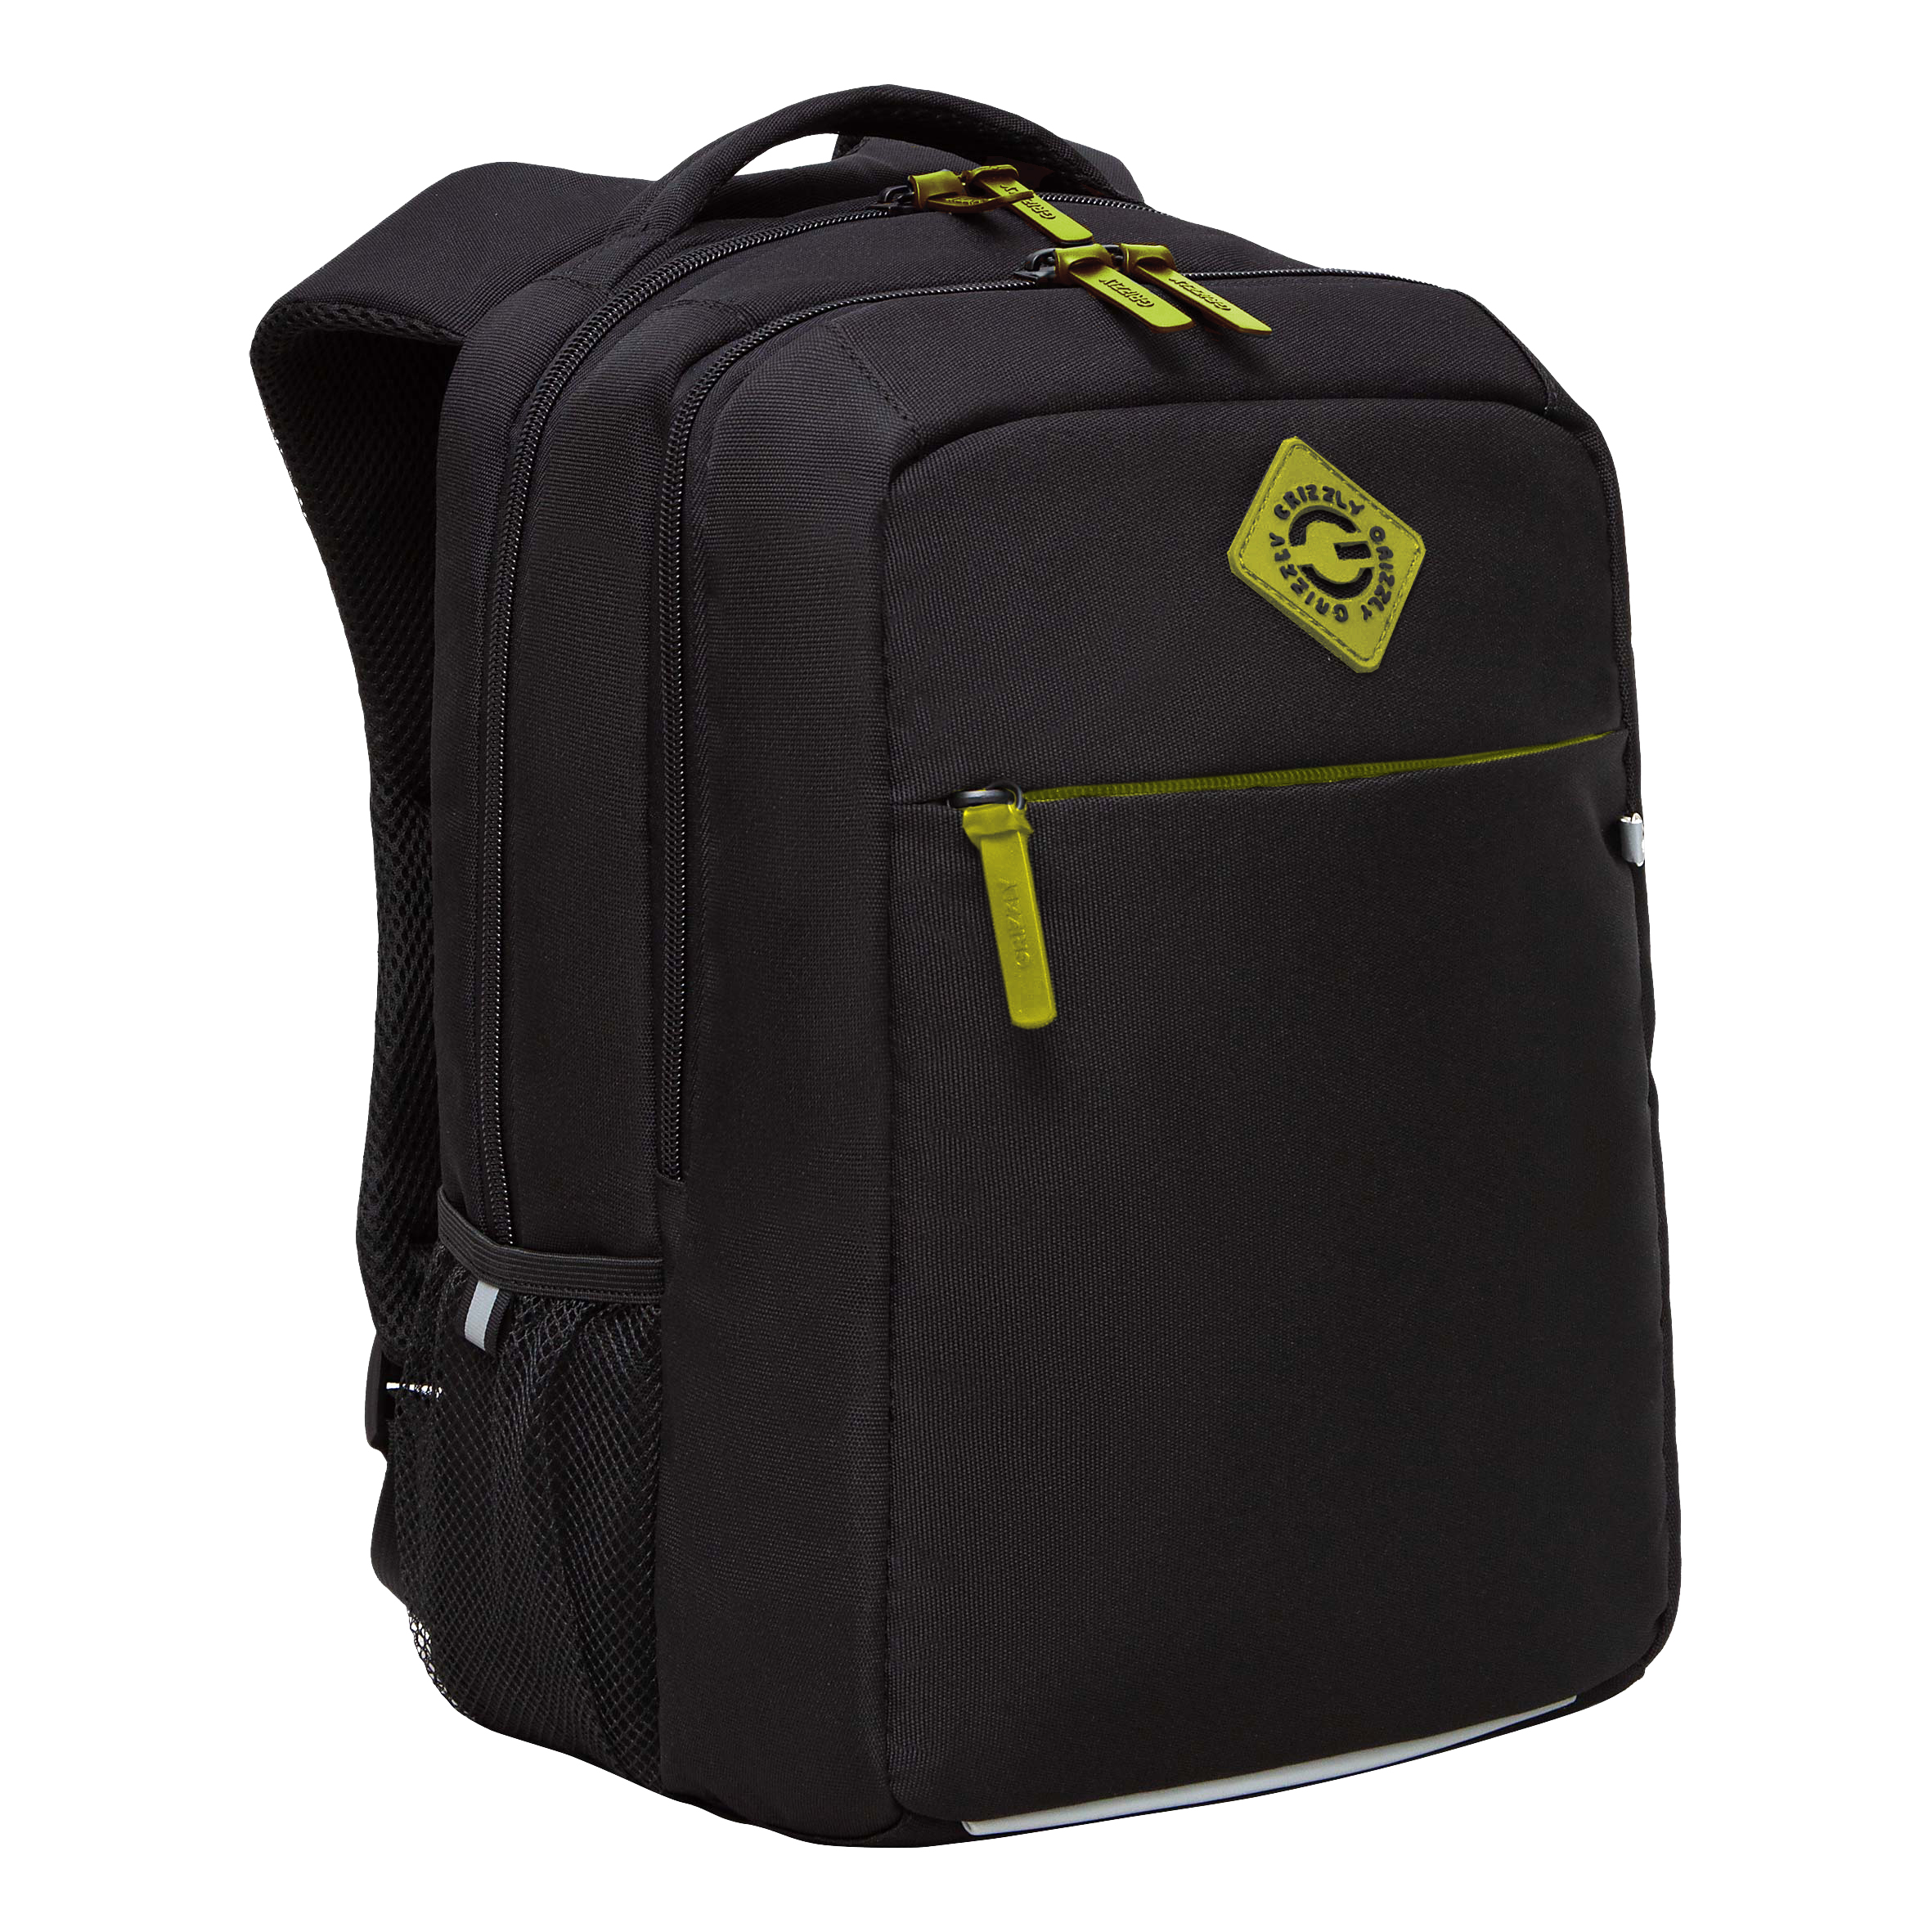 Рюкзак GRIZZLY с карманом для ноутбука 13, анатомический, для мальчика RB-456-12 рюкзак для ноутбука razer concourse pro 17 3 rc81 02920101 0500